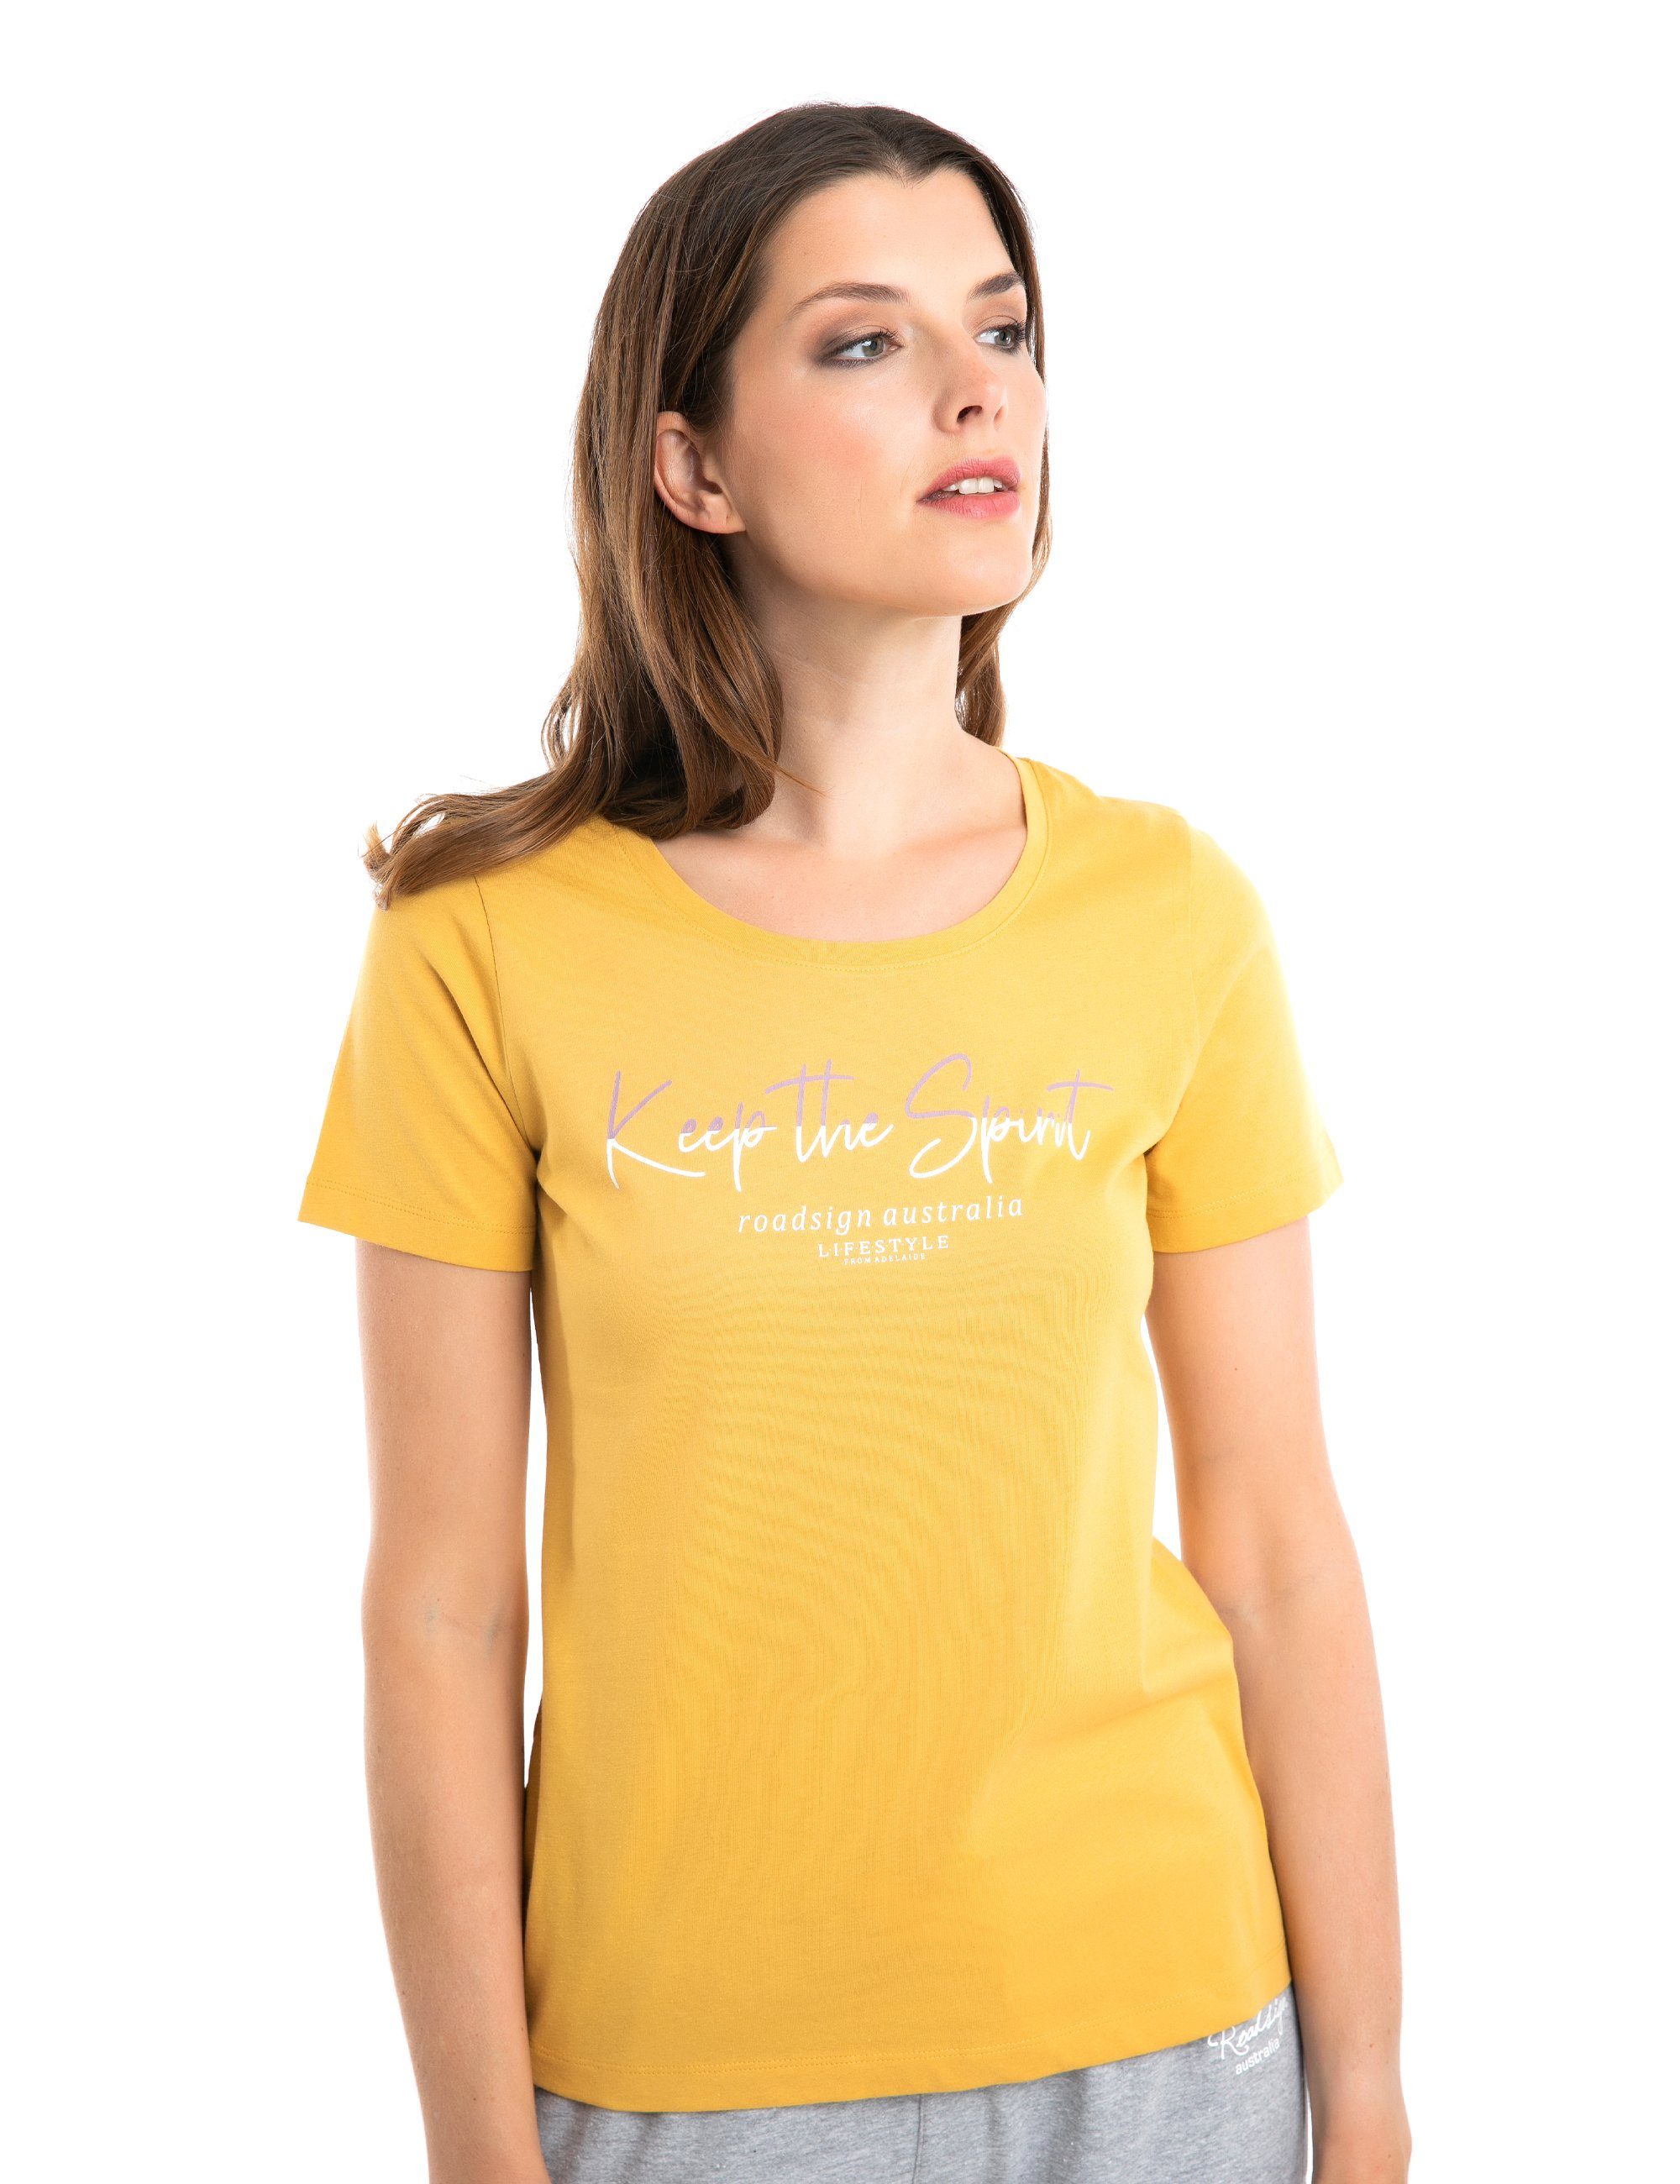 Spirit T-Shirt Keep Baumwolle 100 Logo-Print, mit the & australia ROADSIGN Rundhalsausschnitt % (1-tlg) ocker